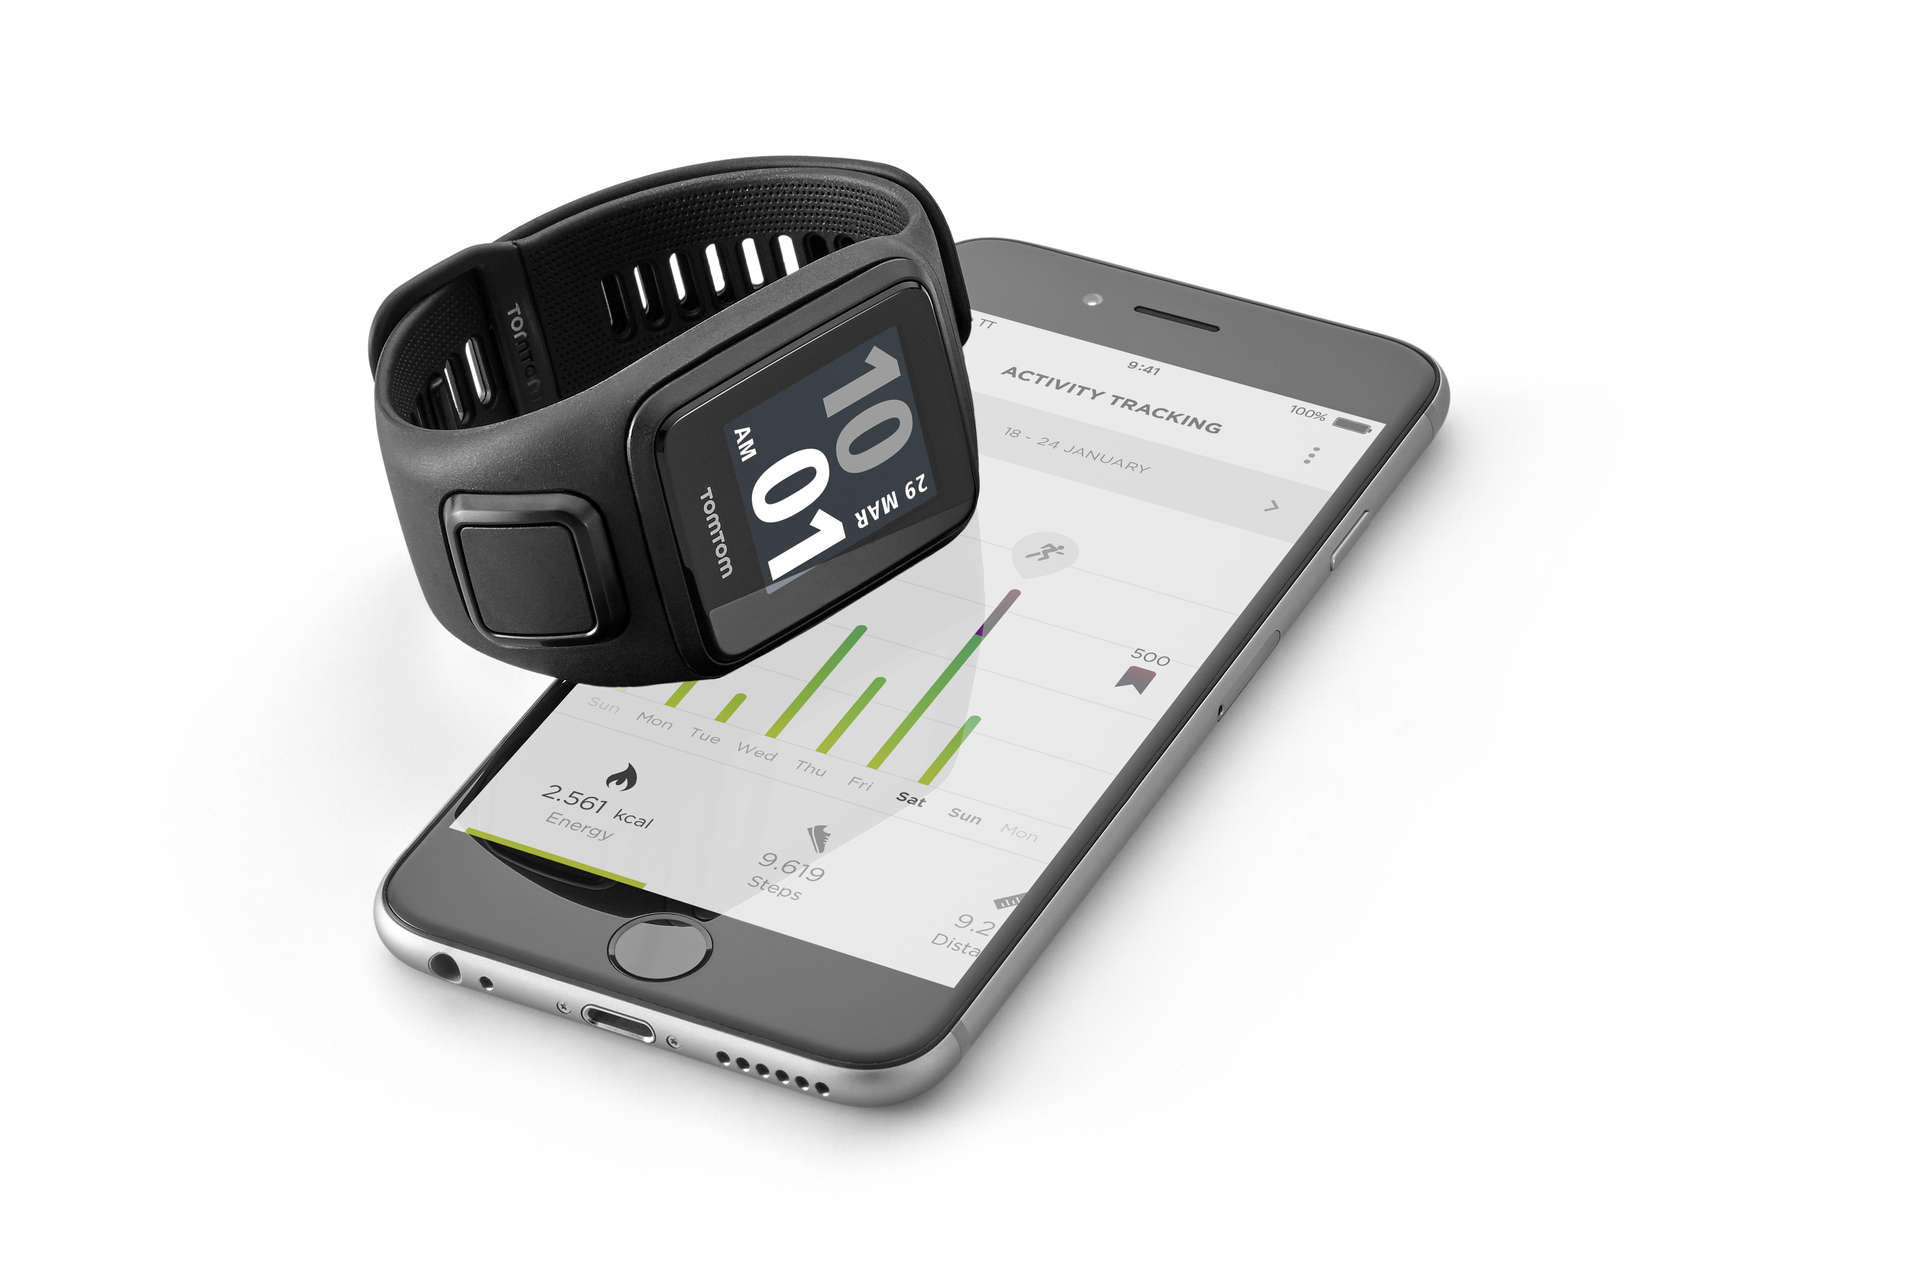 TomTom Runner 3 Cardio + Music Small GPS-horloge Zwart/Groen